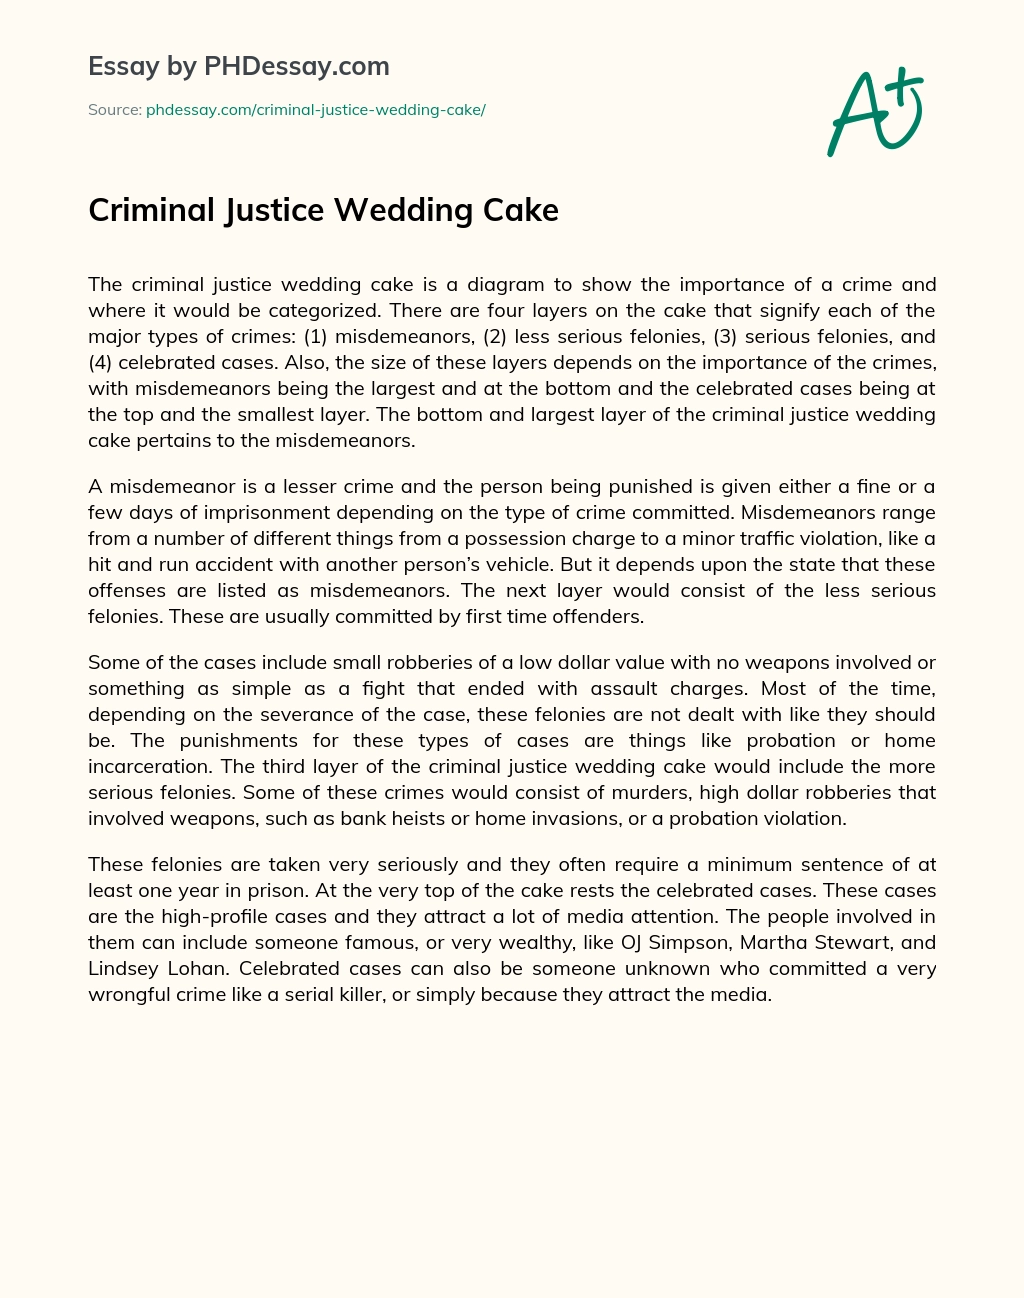 Criminal Justice Wedding Cake essay